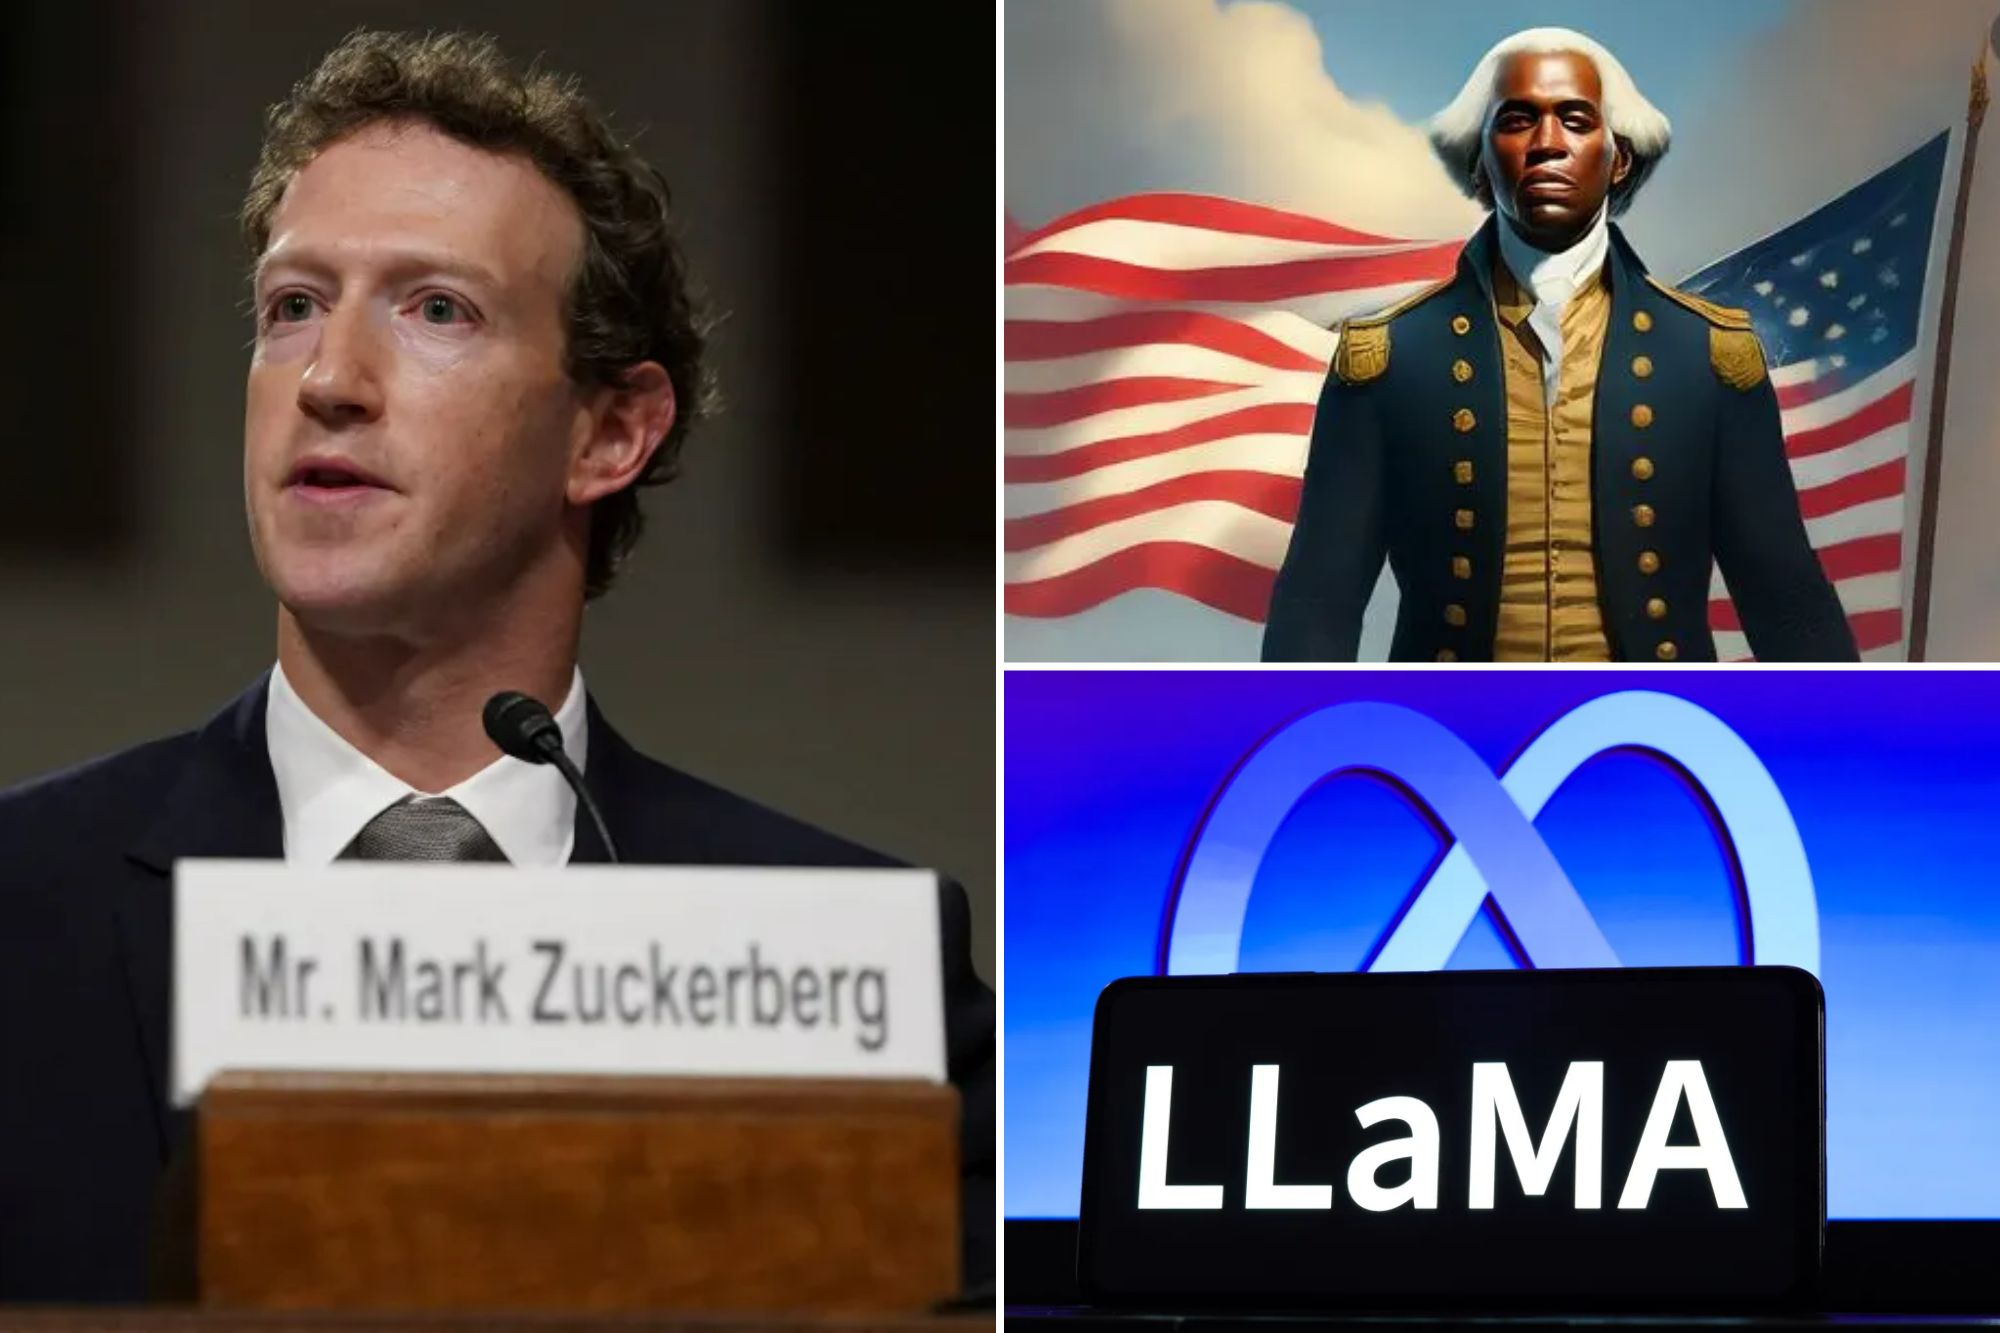 Meta CEO Mark Zuckerberg, Llama logo, black George Washington